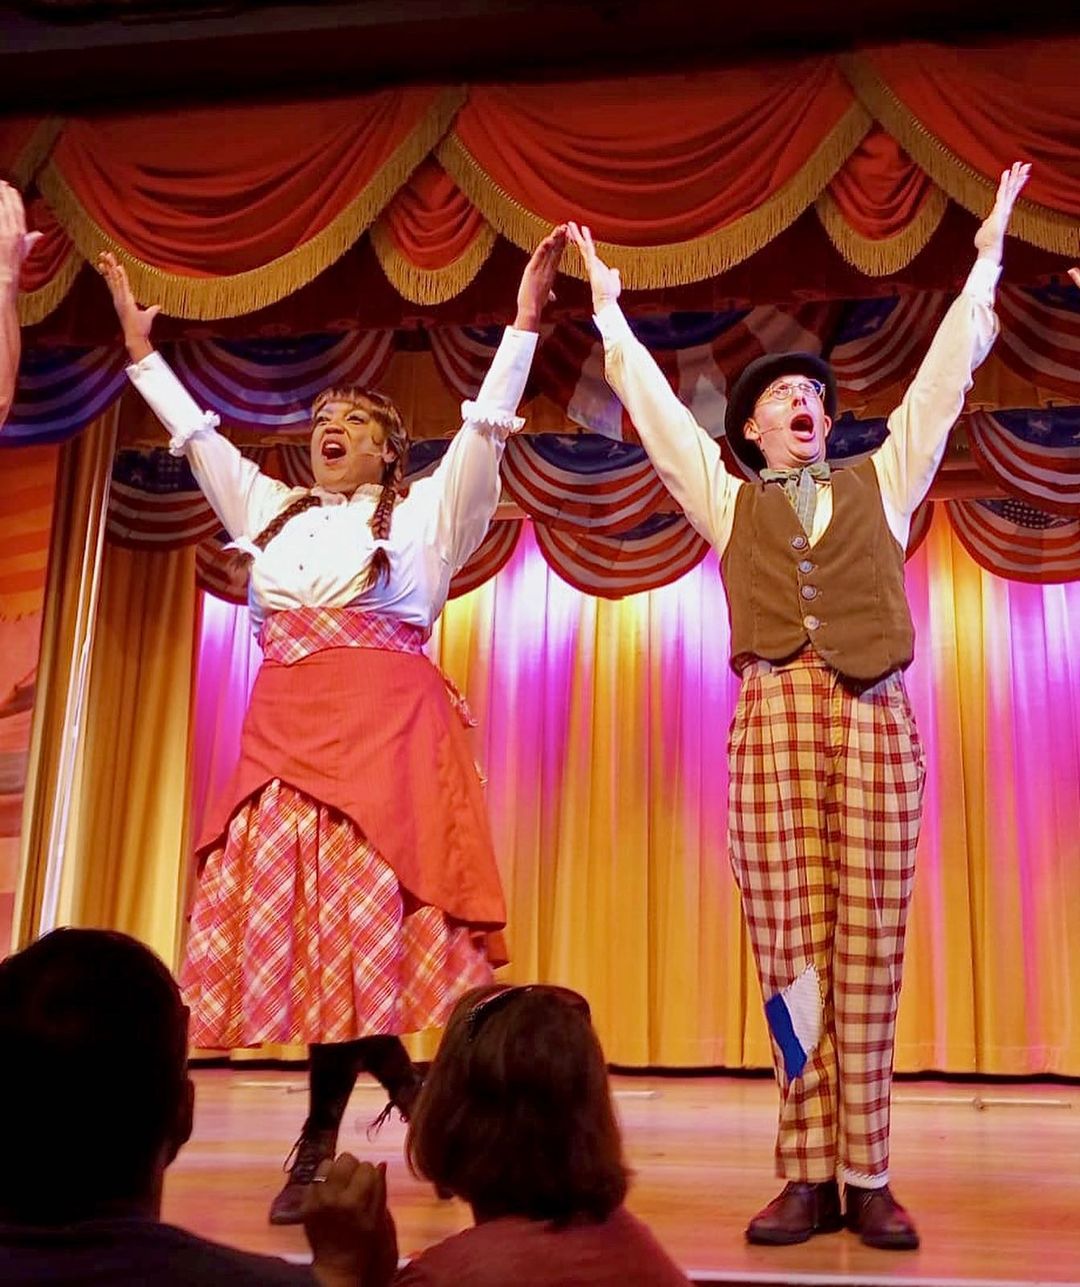 Hoop-Dee-Doo Musical Revue – Essen und Show bei Disney (Fort Wilderness)